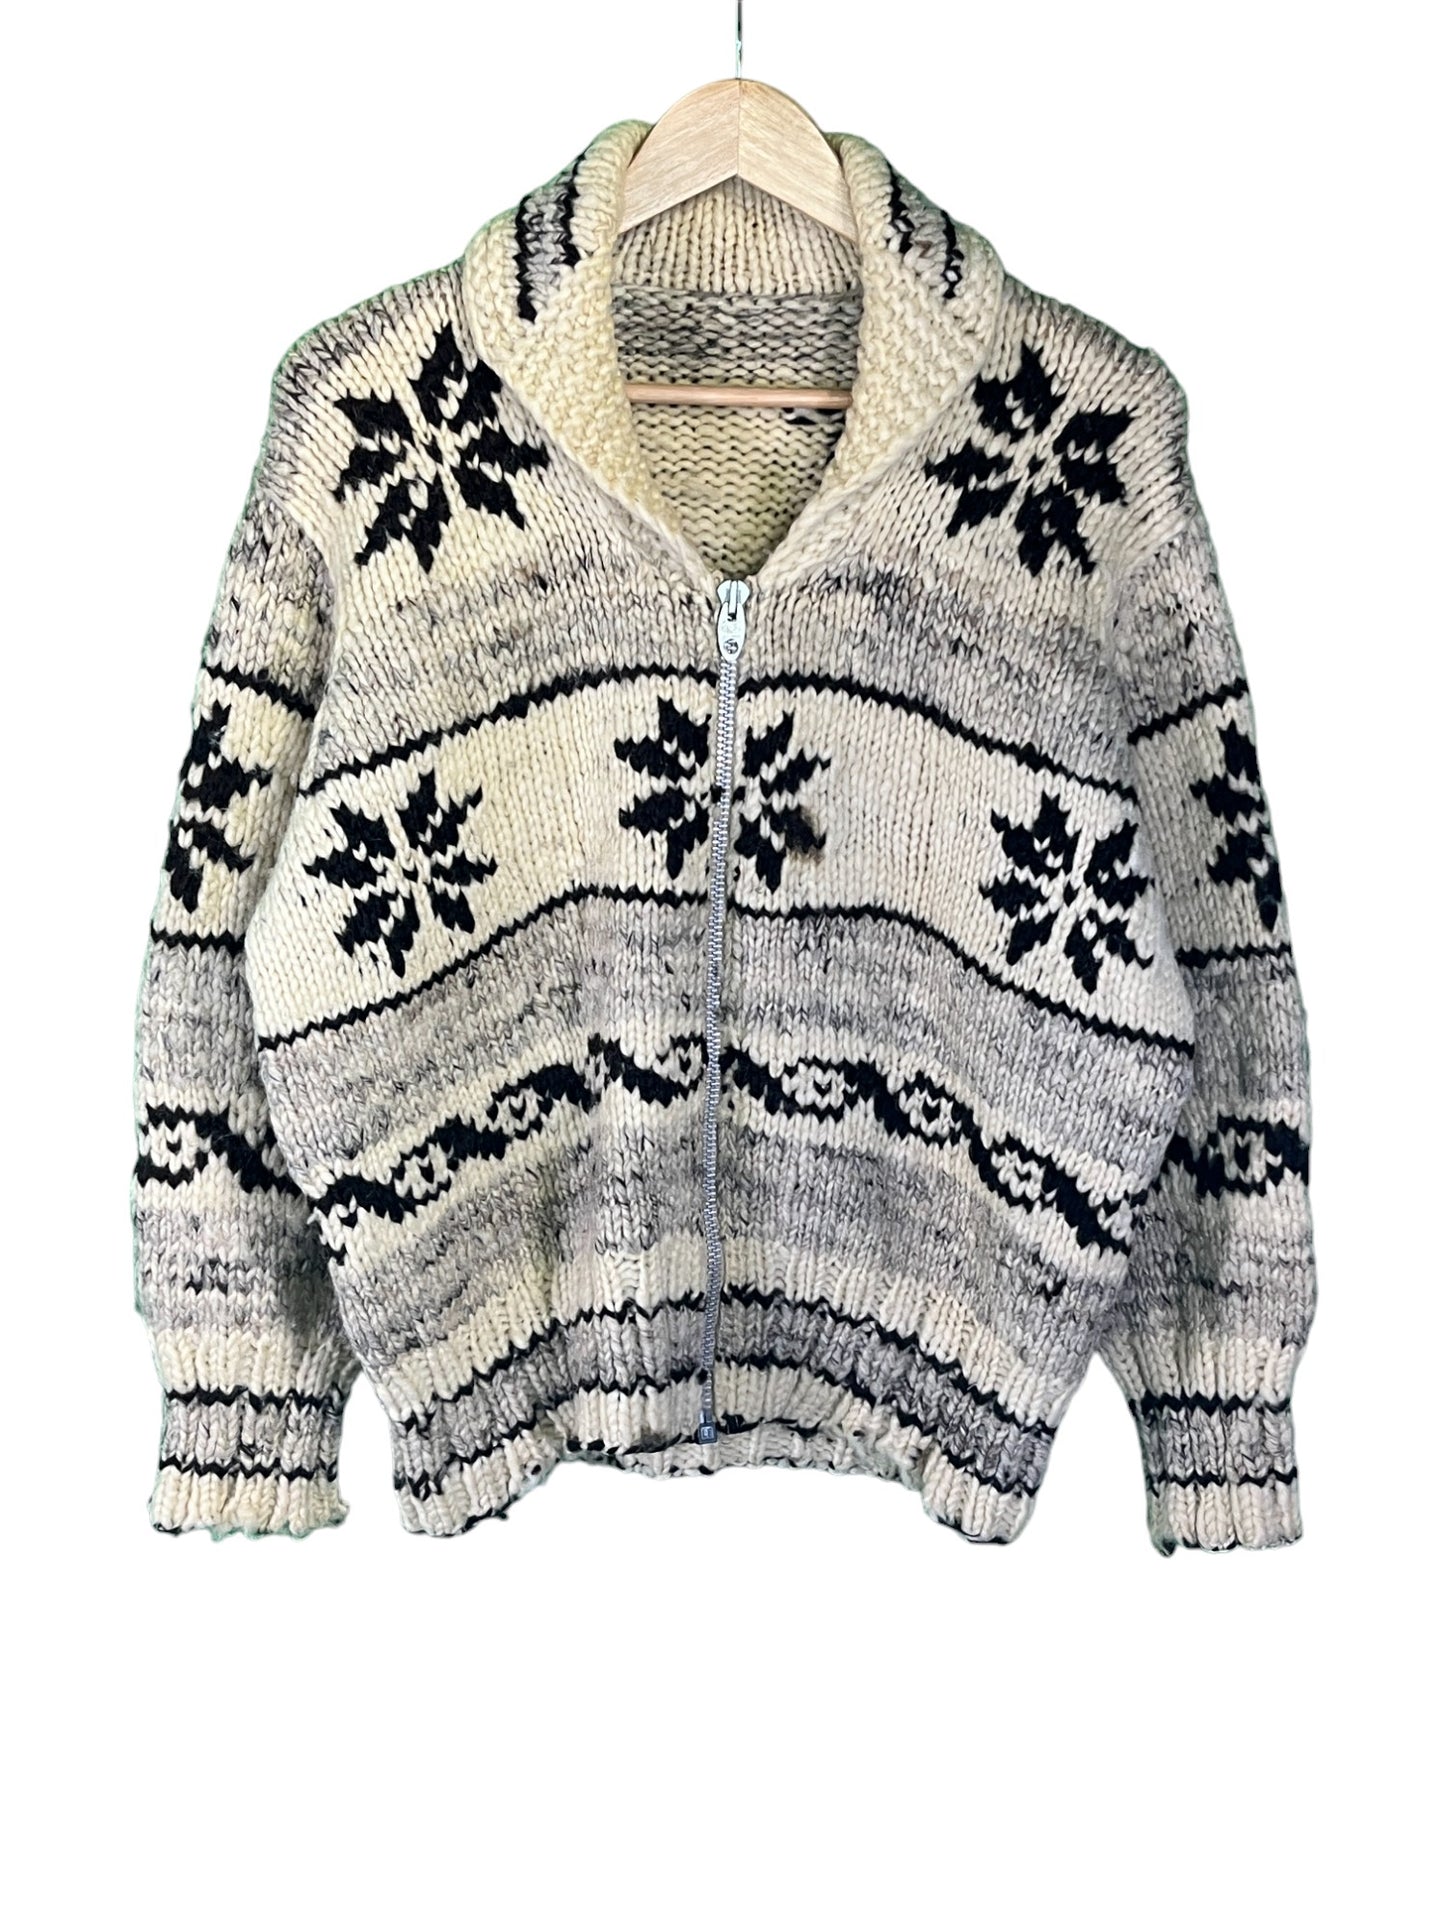 Vintage 50's/60's Cowichan Hand Made Zip Up Sweater Lightning Zip Size S/M